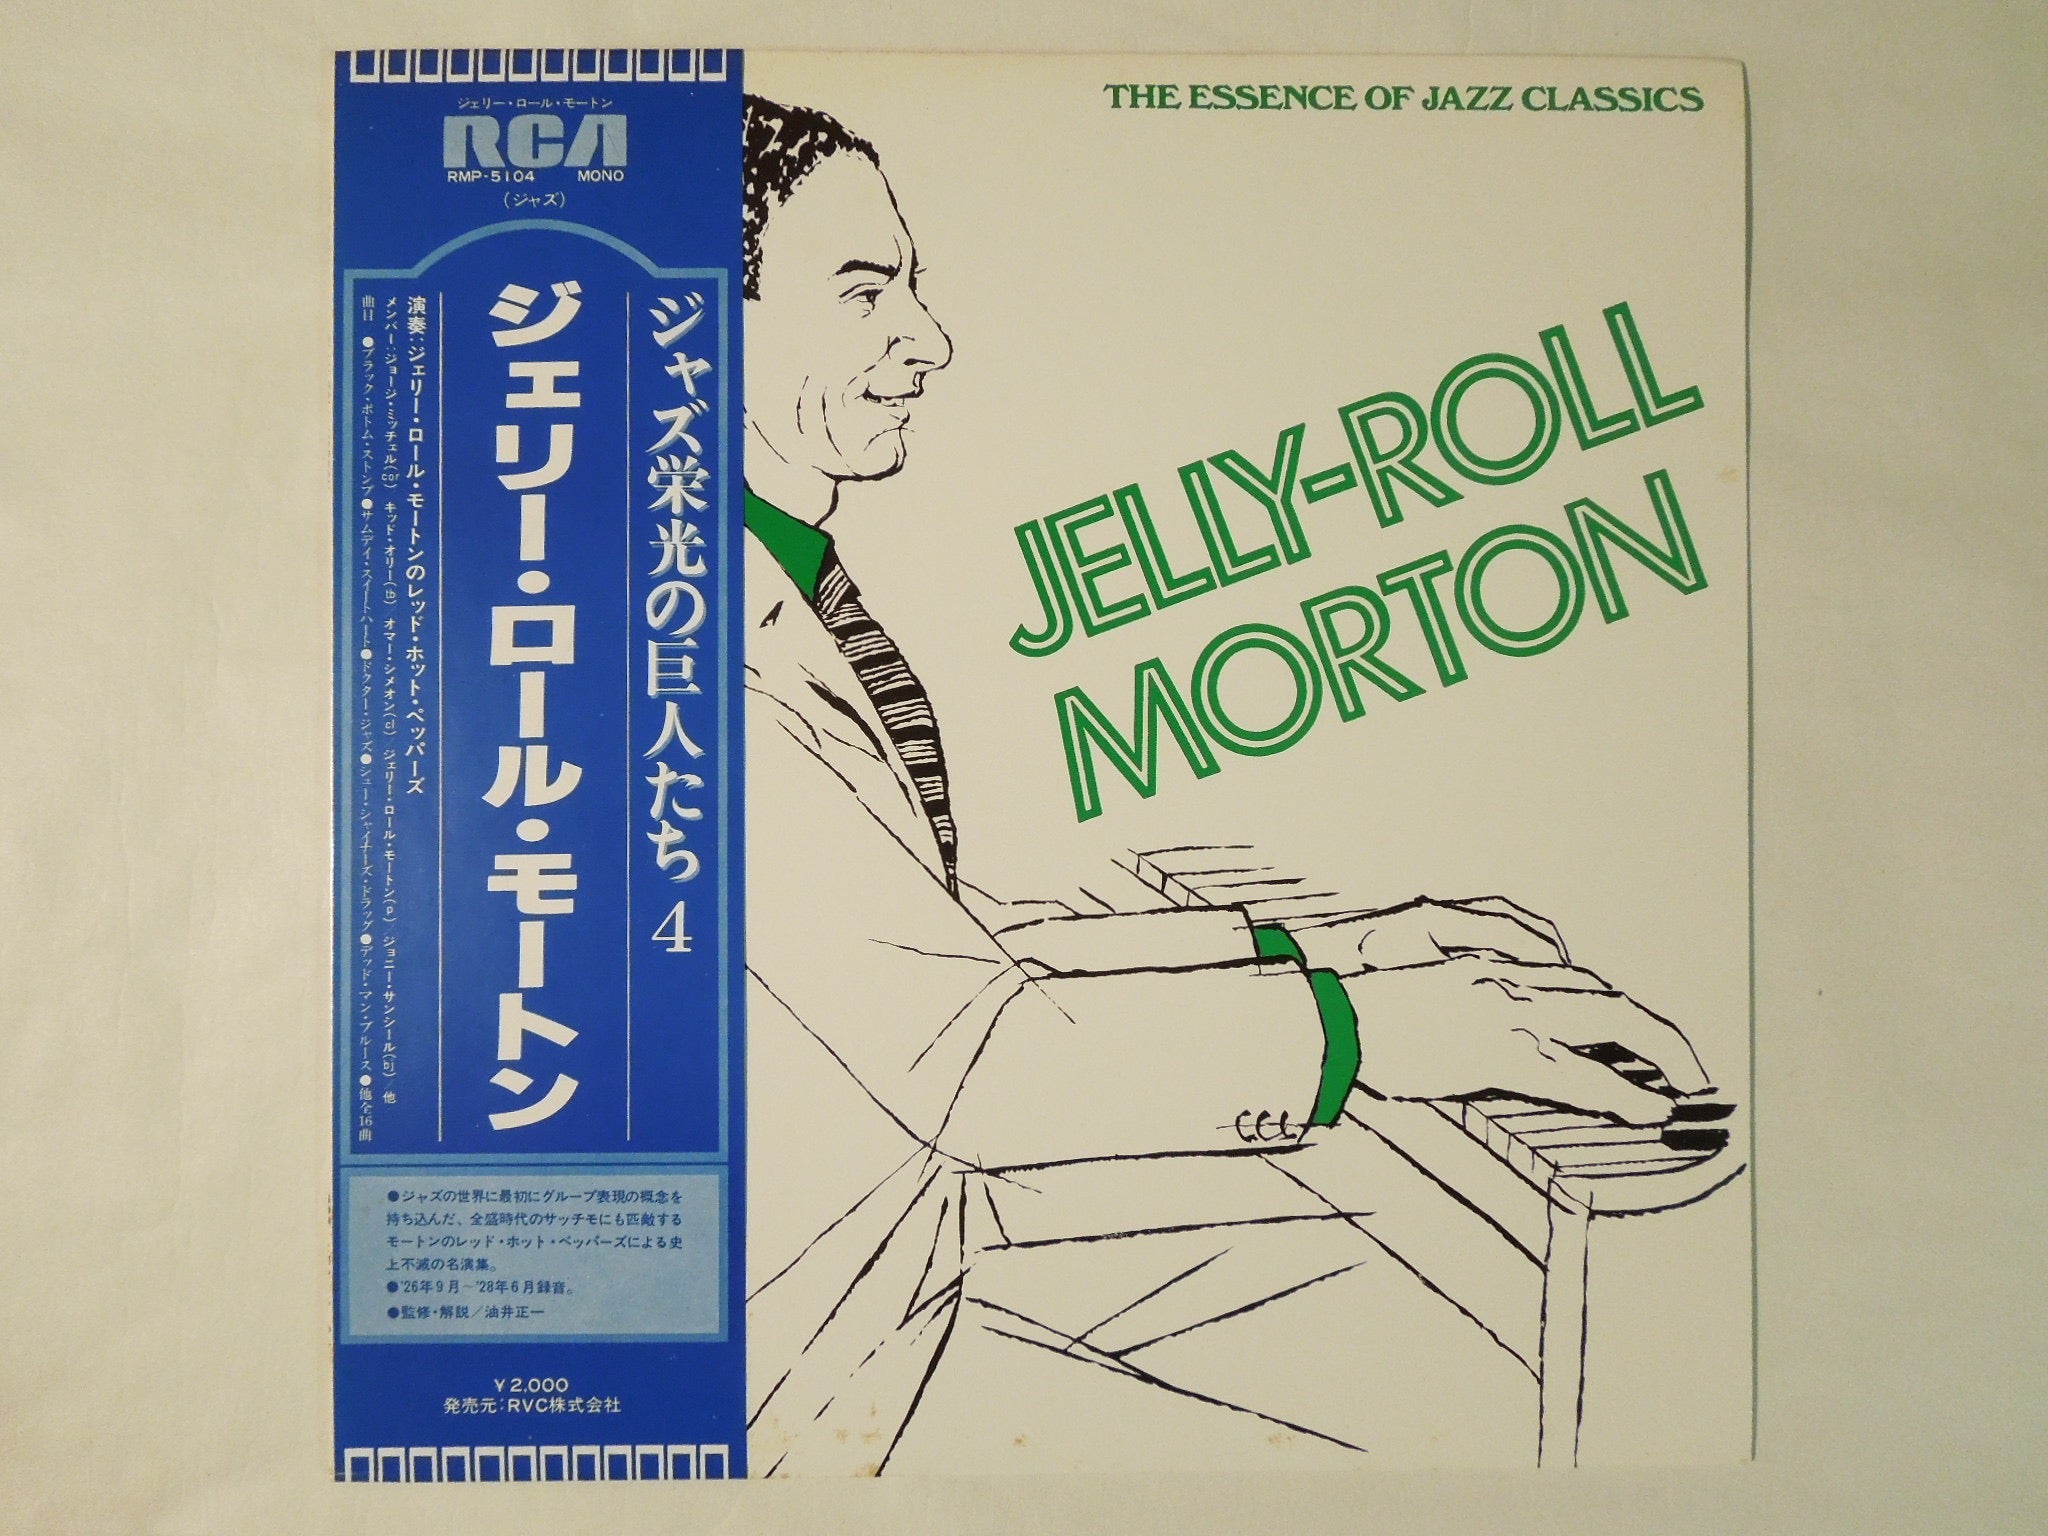 Jelly Roll Morton The Essence Of Jazz Classics Vol 4 Rca Rmp 5104 Solidity Records